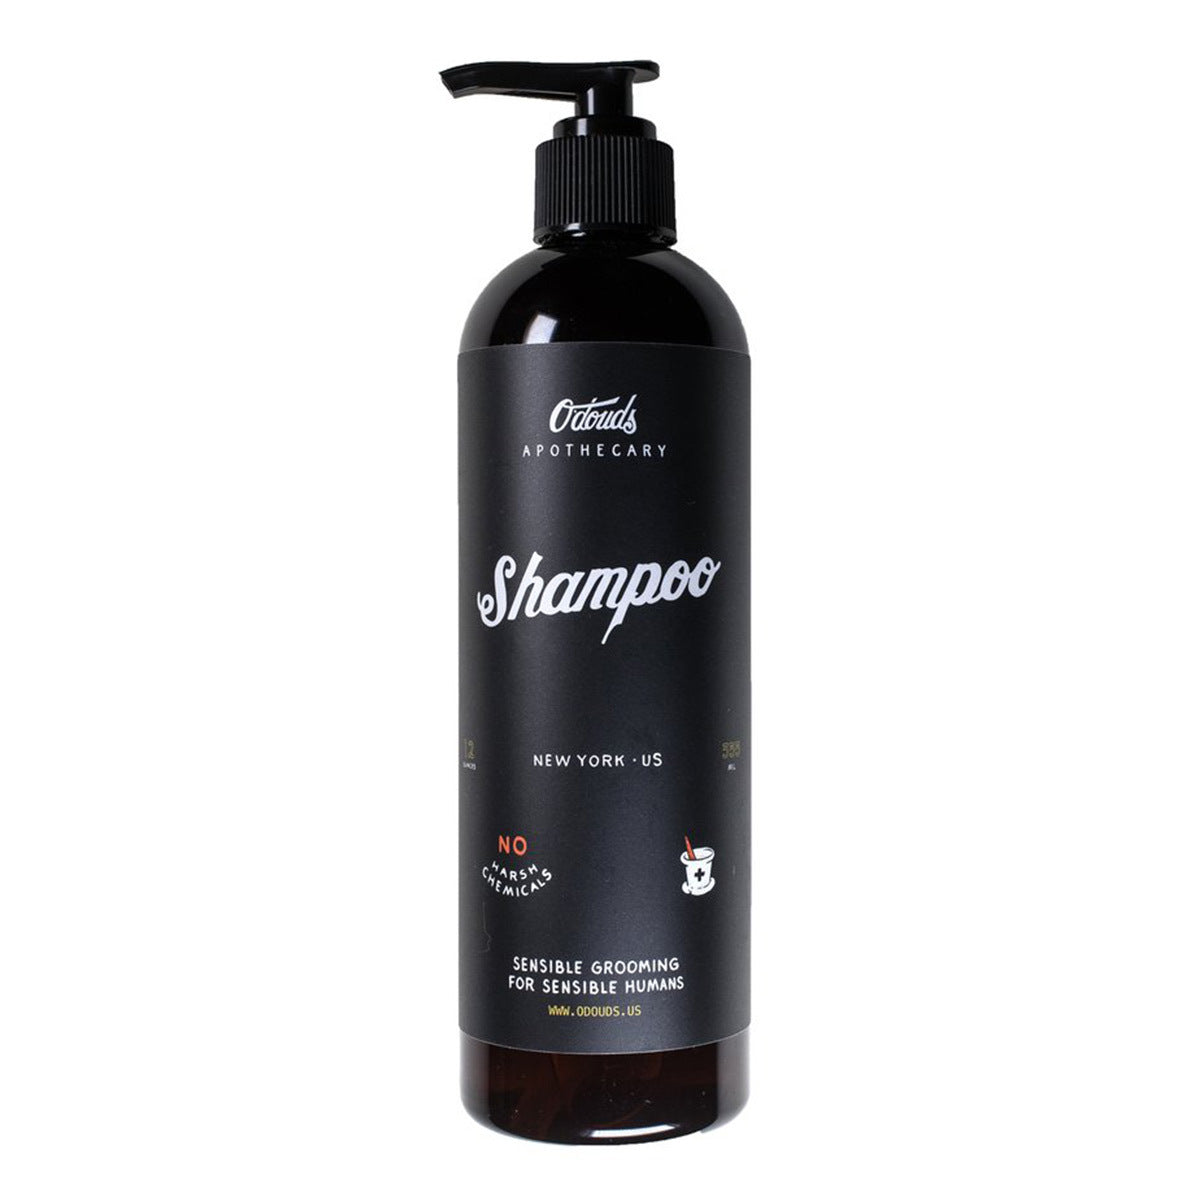 Primary image of Shampoo